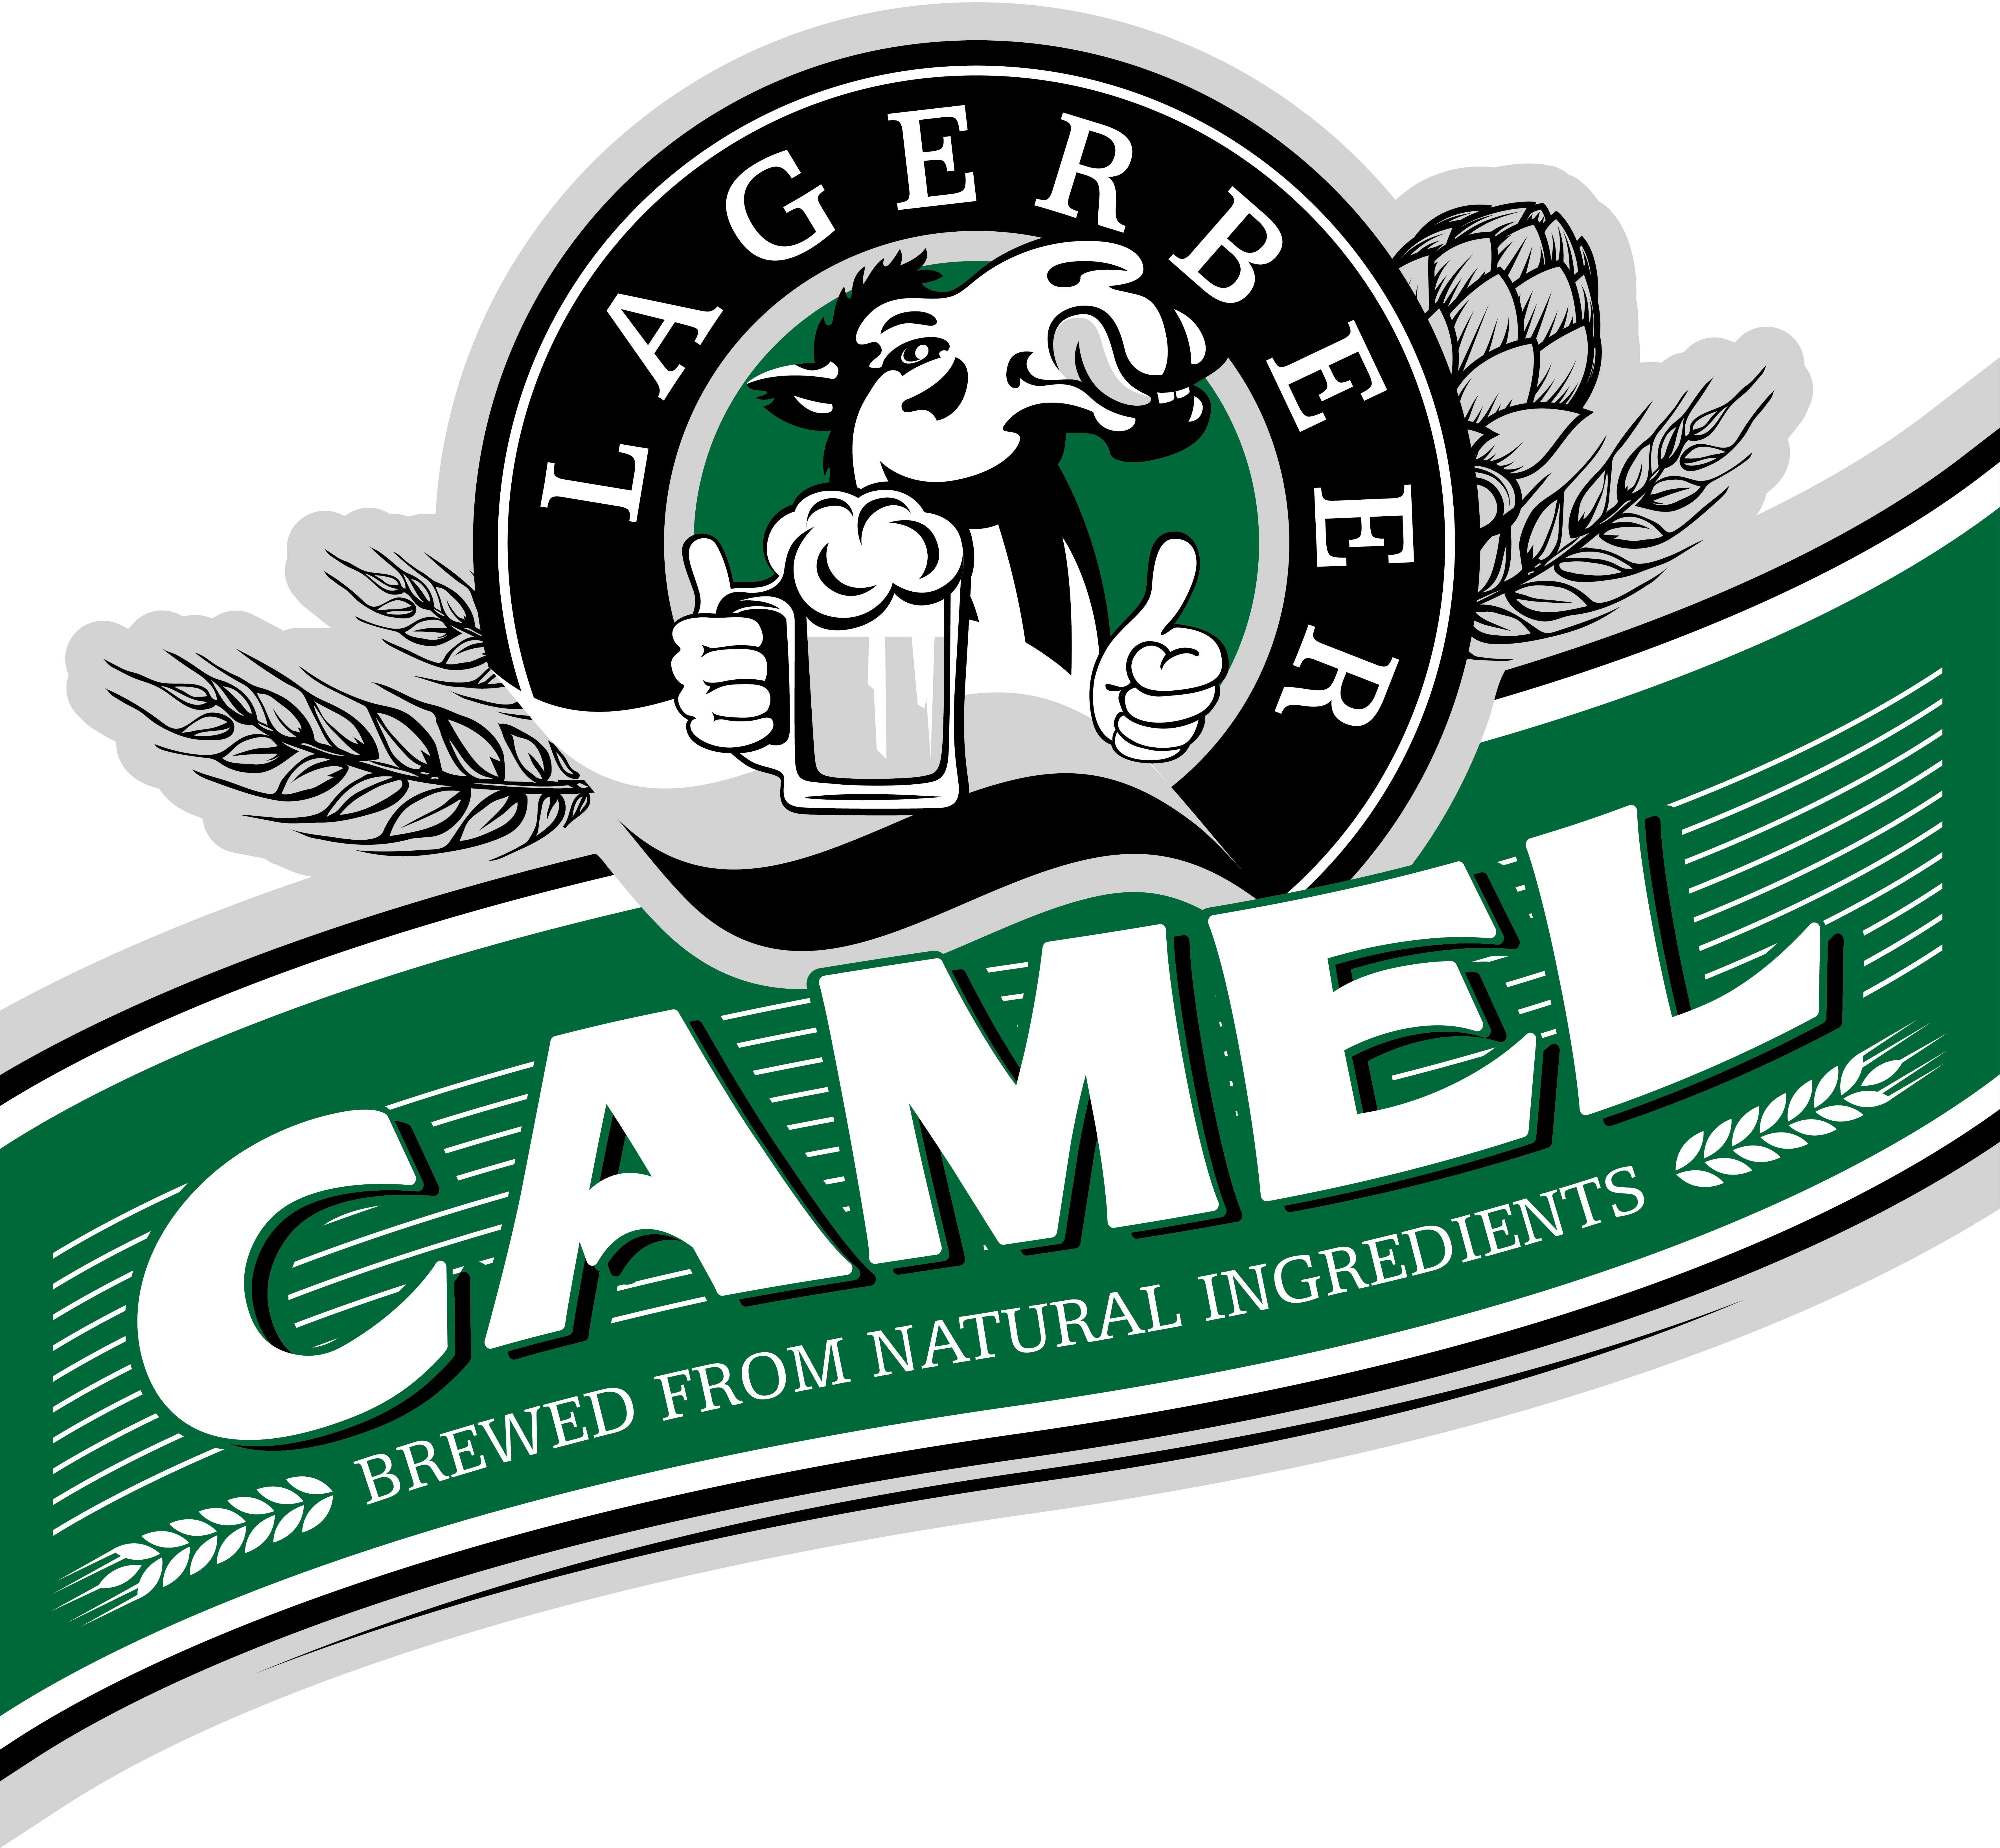 CAMEL BEER